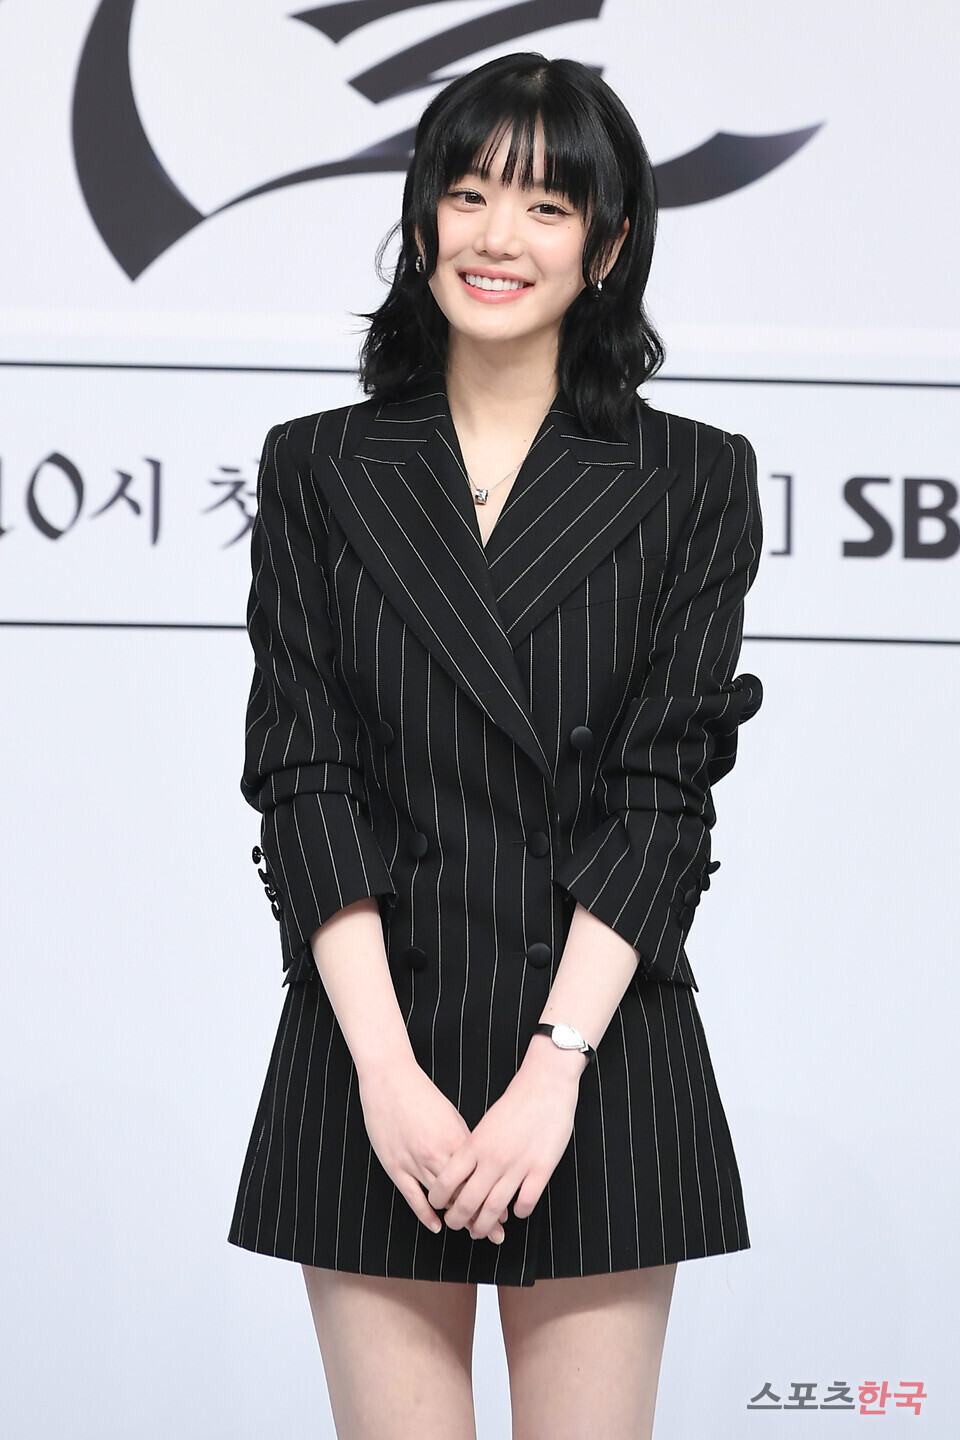 SBS 새 금토드라마 ‘7인의 부활’ 제작발표회에 참석한 배우 이유비. ⓒ이혜영 기자 lhy@hankooki.com